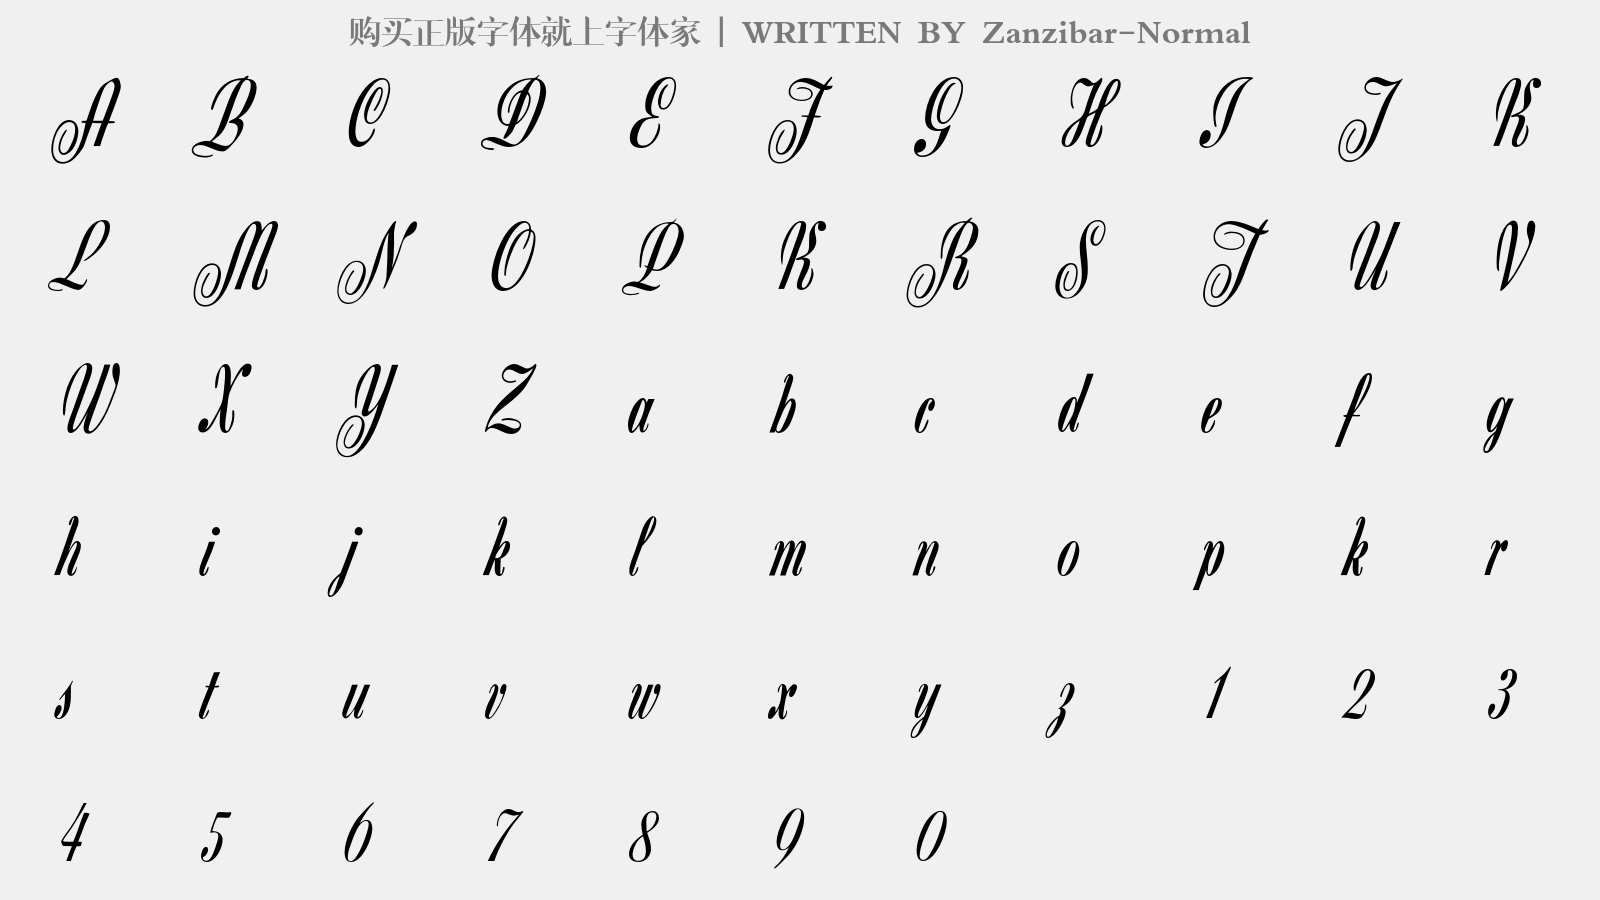 Zanzibar-Normal - 大写字母/小写字母/数字